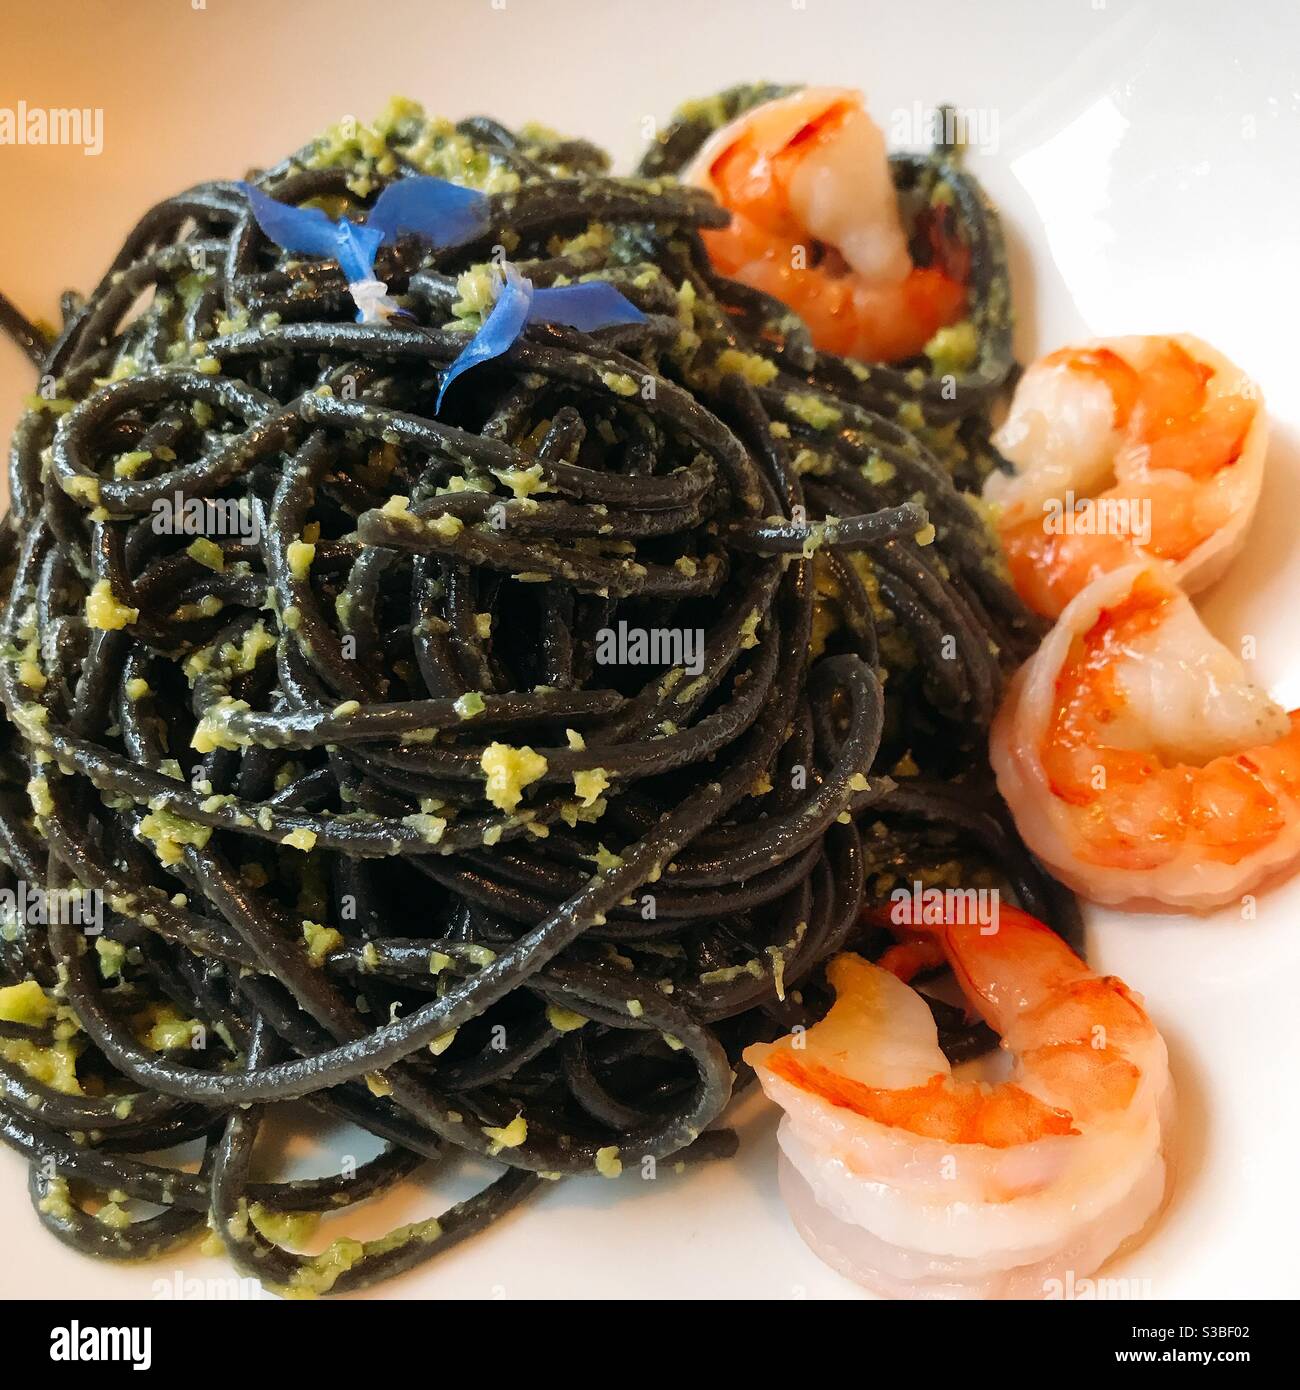 Squid ink pasta with pesto and shrimp Stock Photo